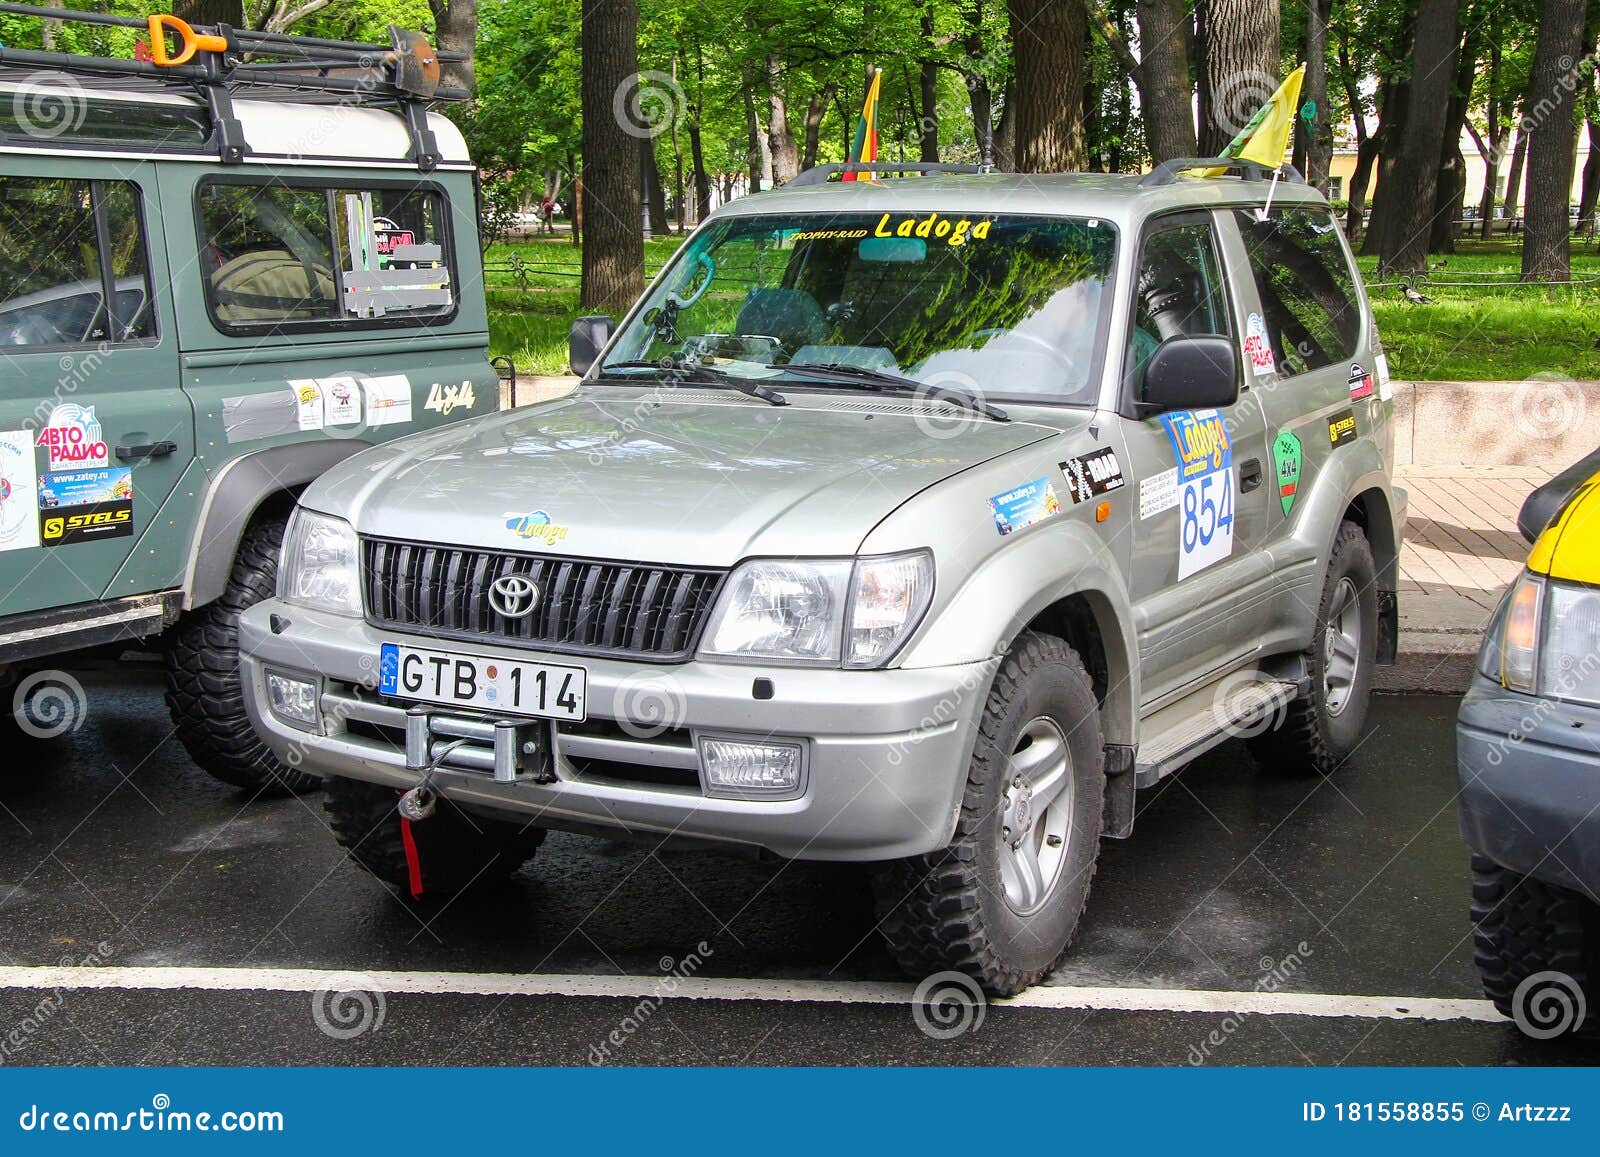 Toyota-Landkreuzer Prado 90 Redaktionelles Bild - Bild von prado